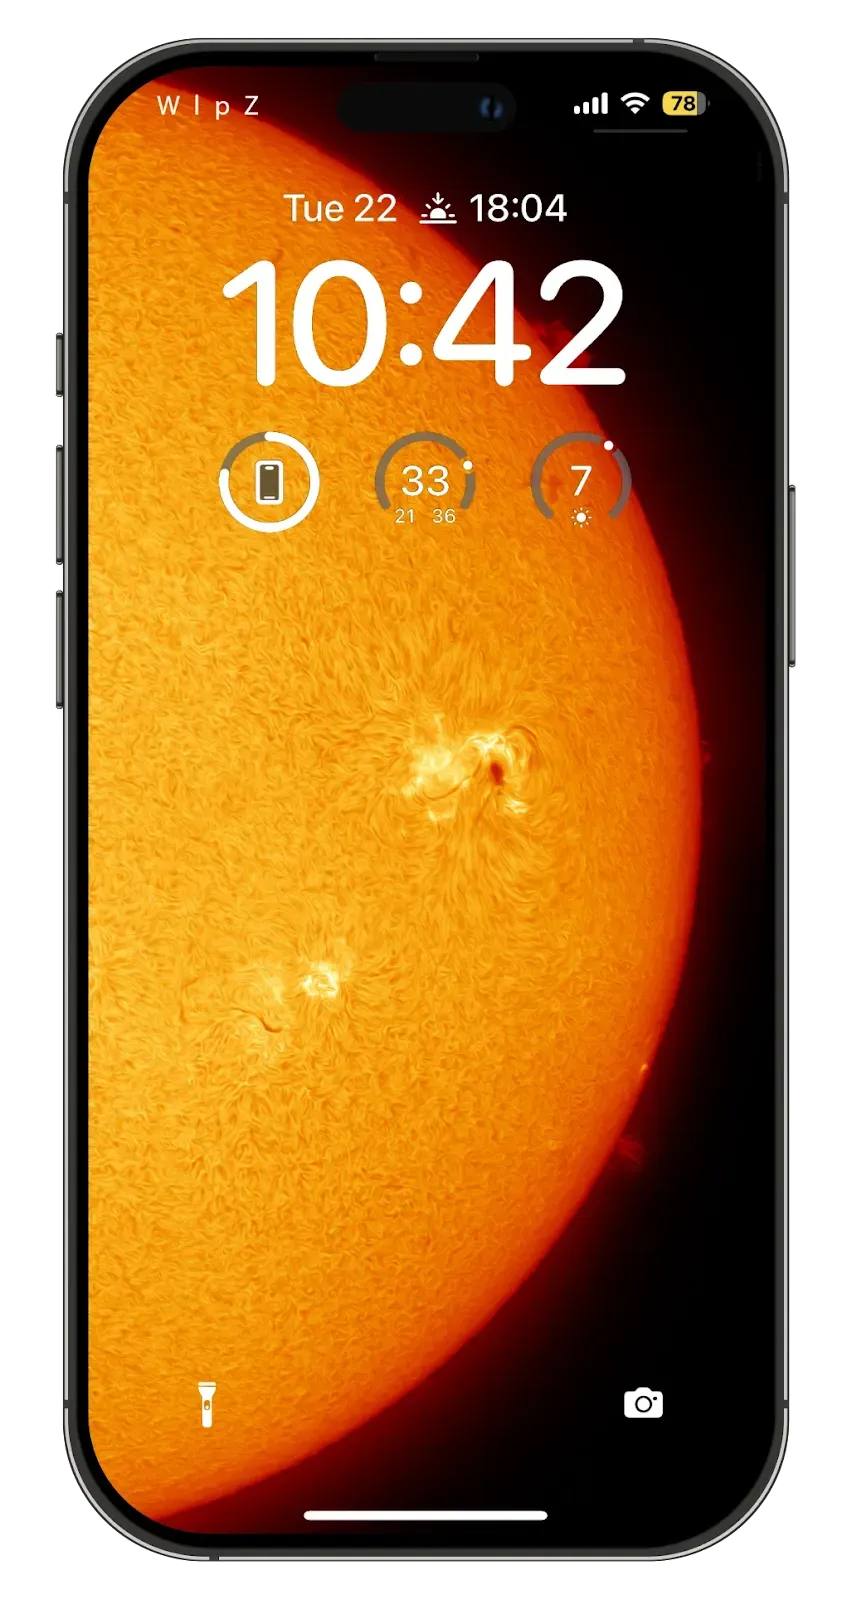 giant sun photo wallpaper for phone